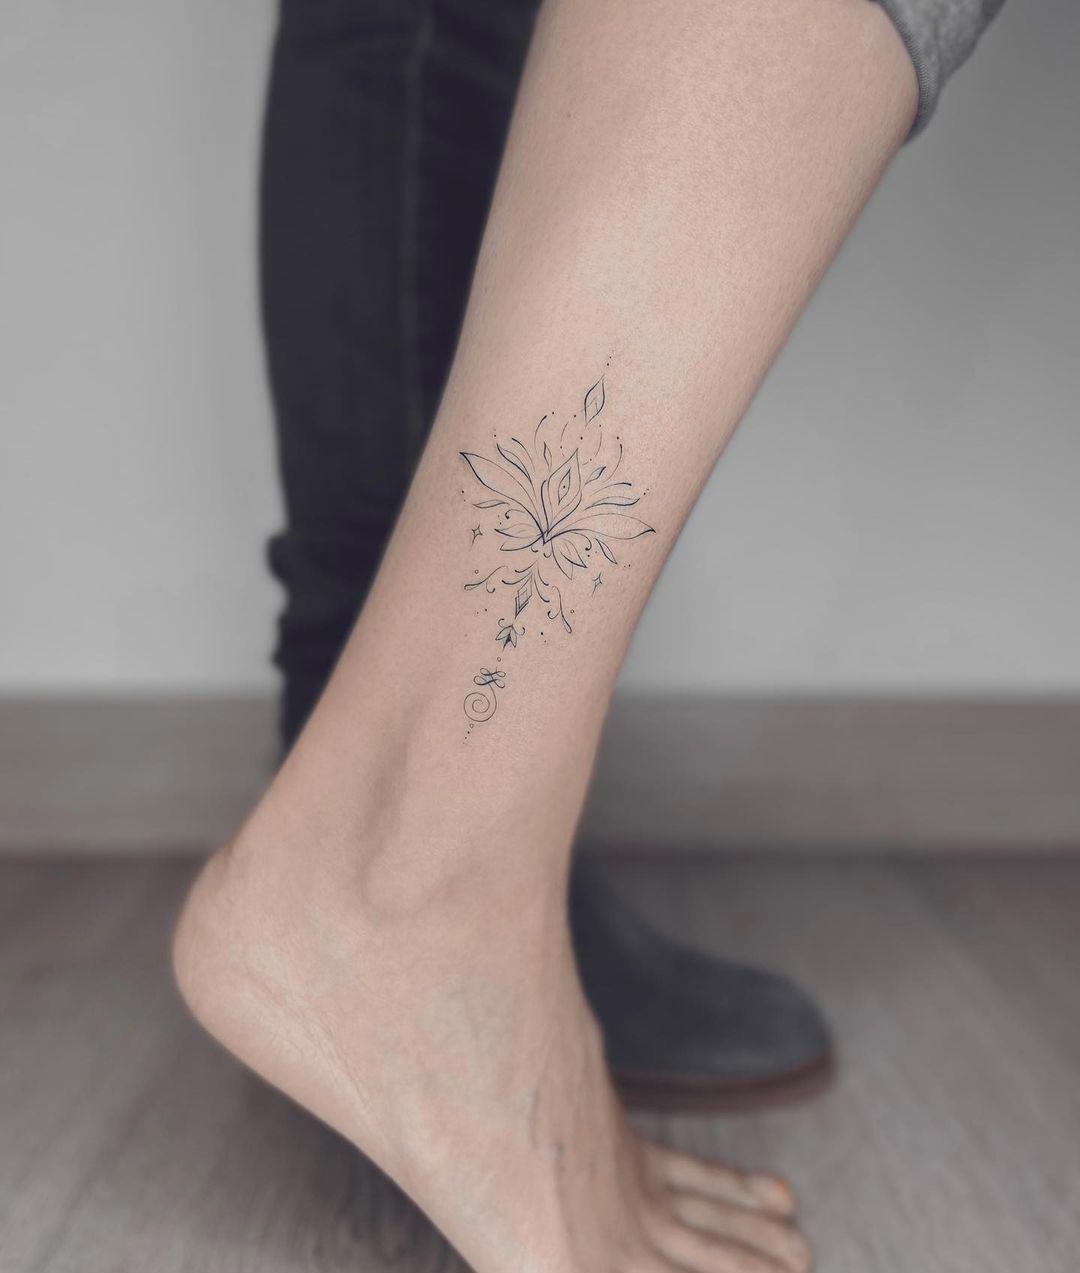 Tatuaje de flor de loto en el tobillo